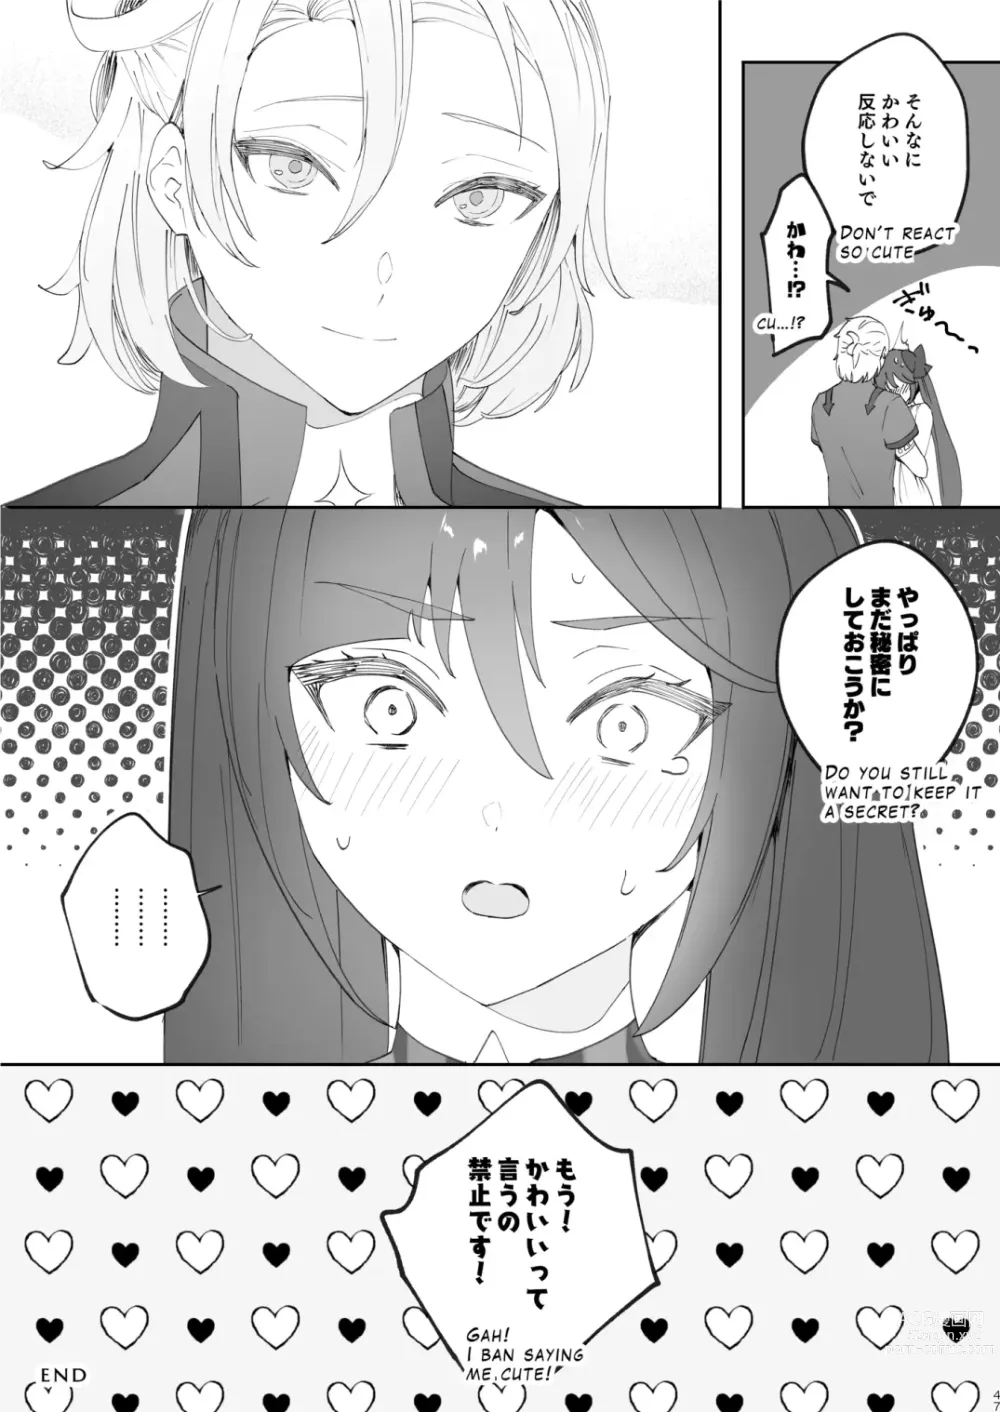 Page 46 of doujinshi Kimi wa Kawaii